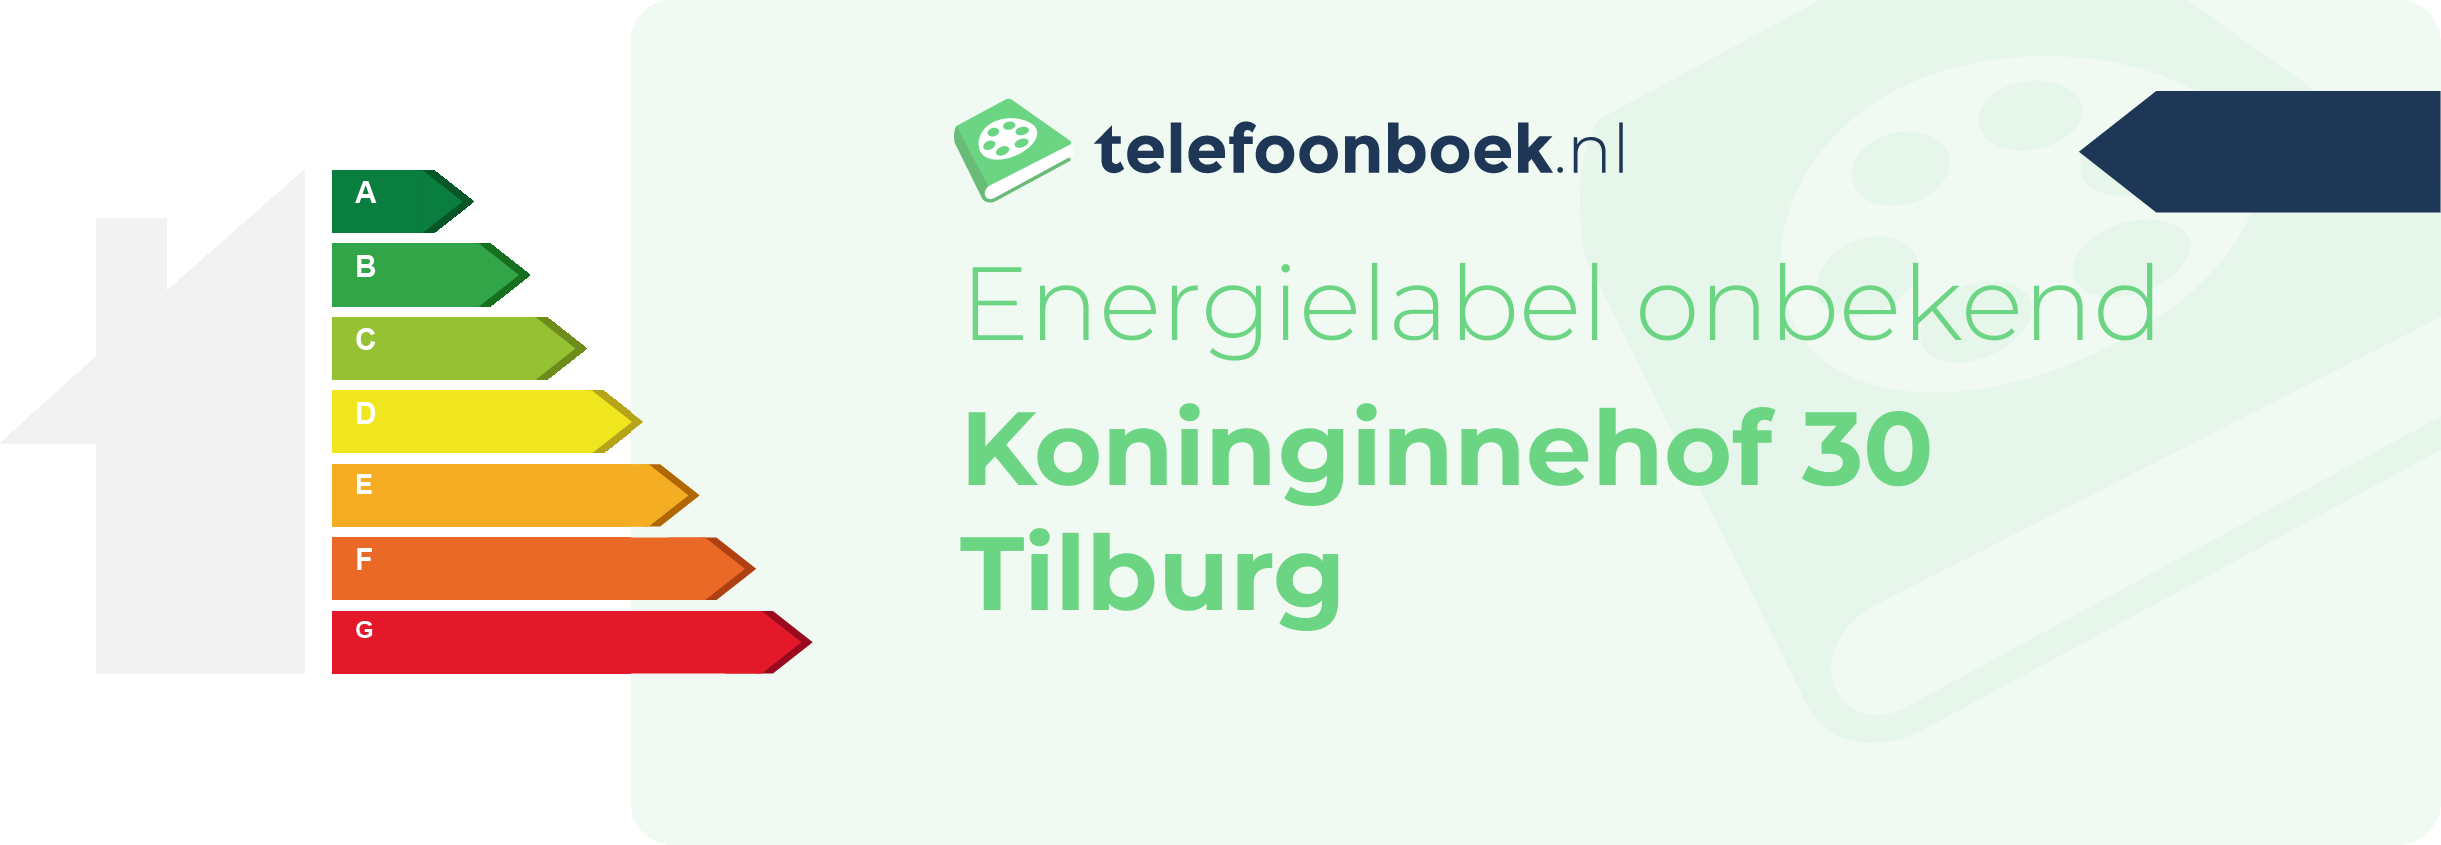 Energielabel Koninginnehof 30 Tilburg